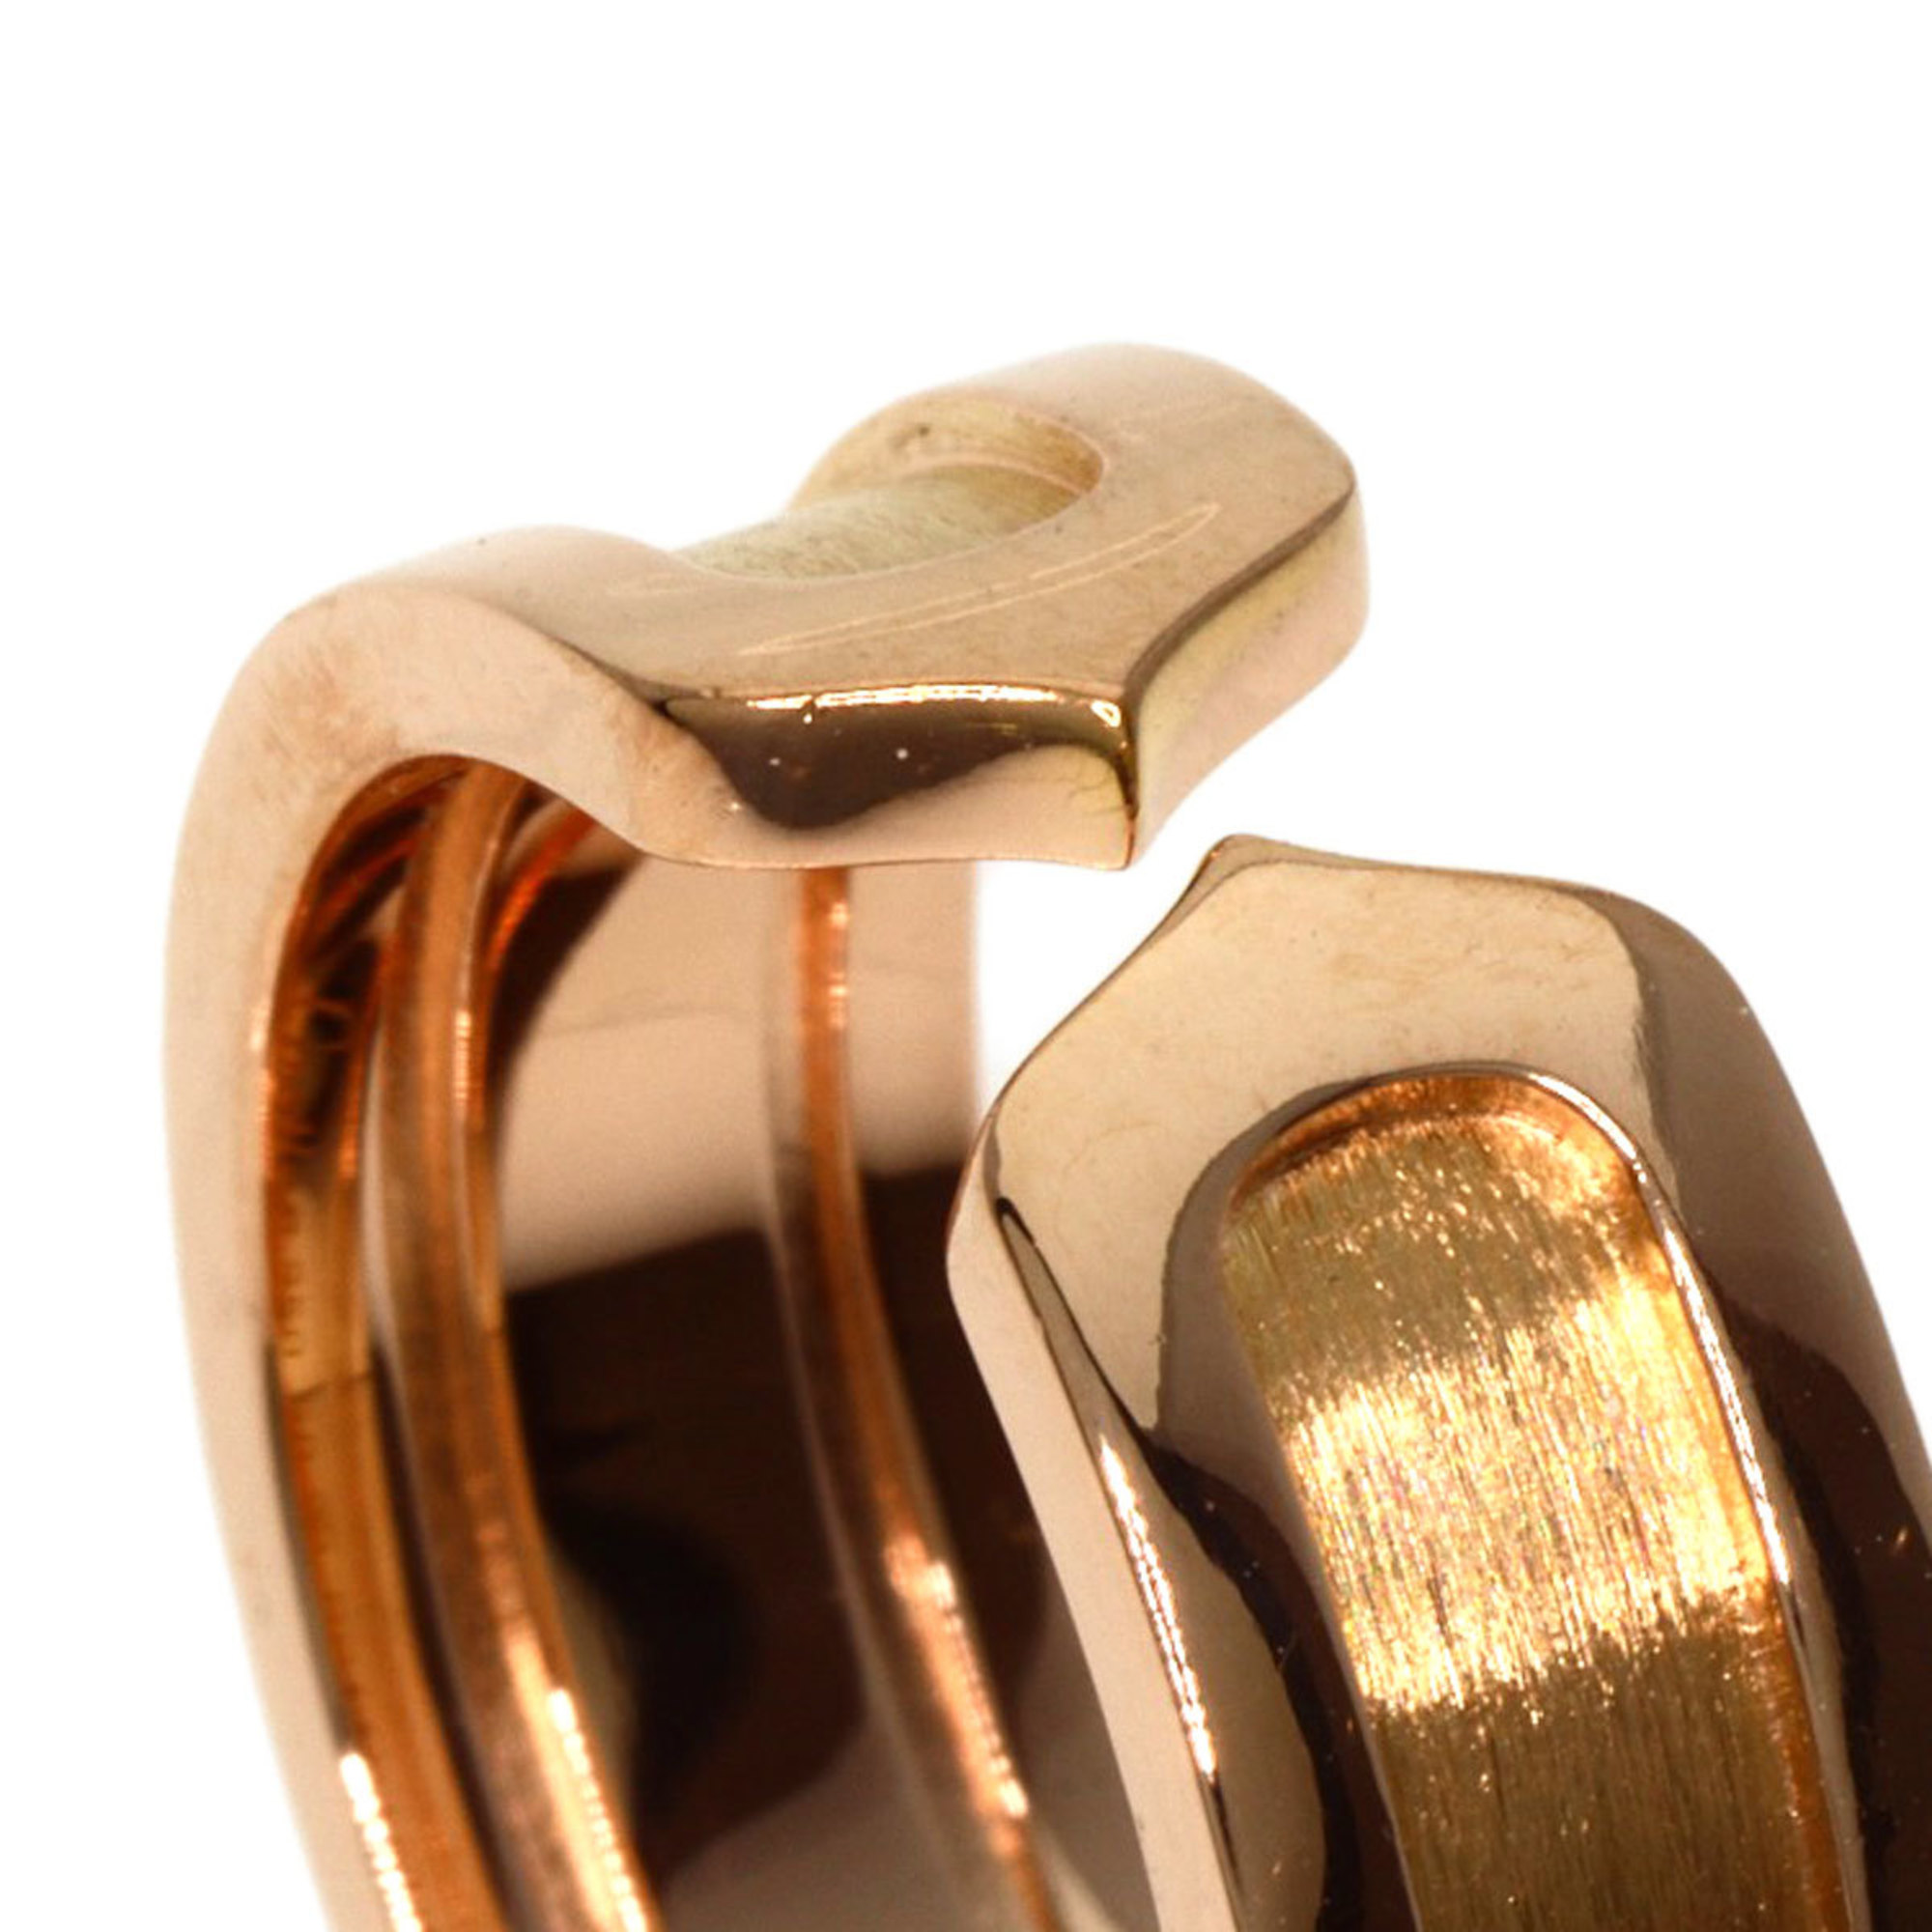 Cartier C2 Ring SM #50 Ring, 18K Pink Gold, Women's CARTIER